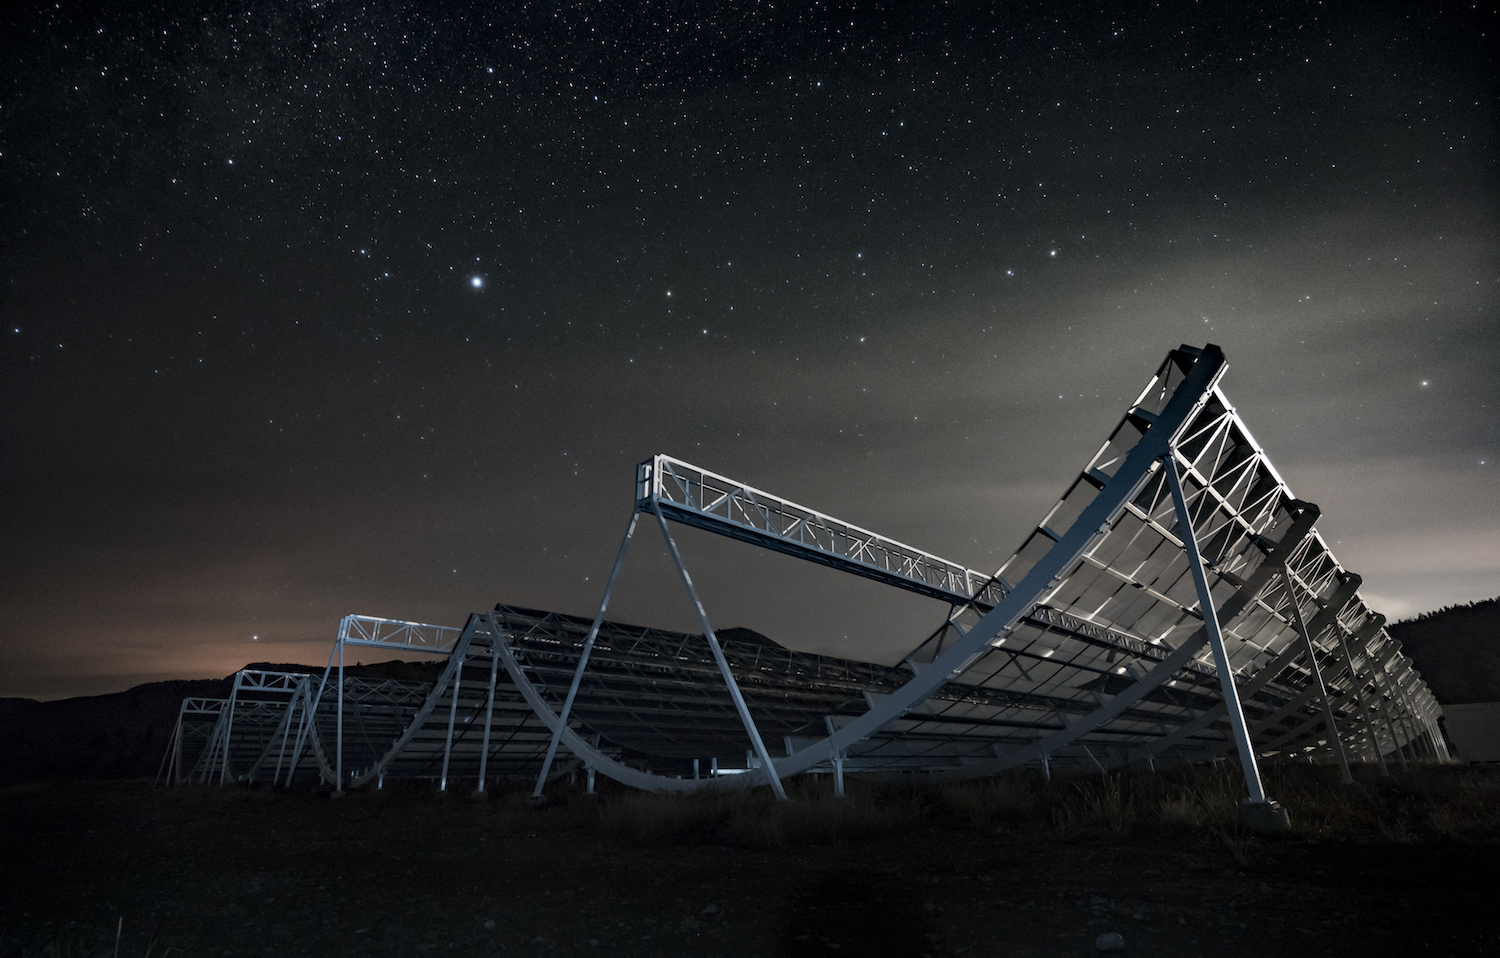 The CHIME radio telescope at night.